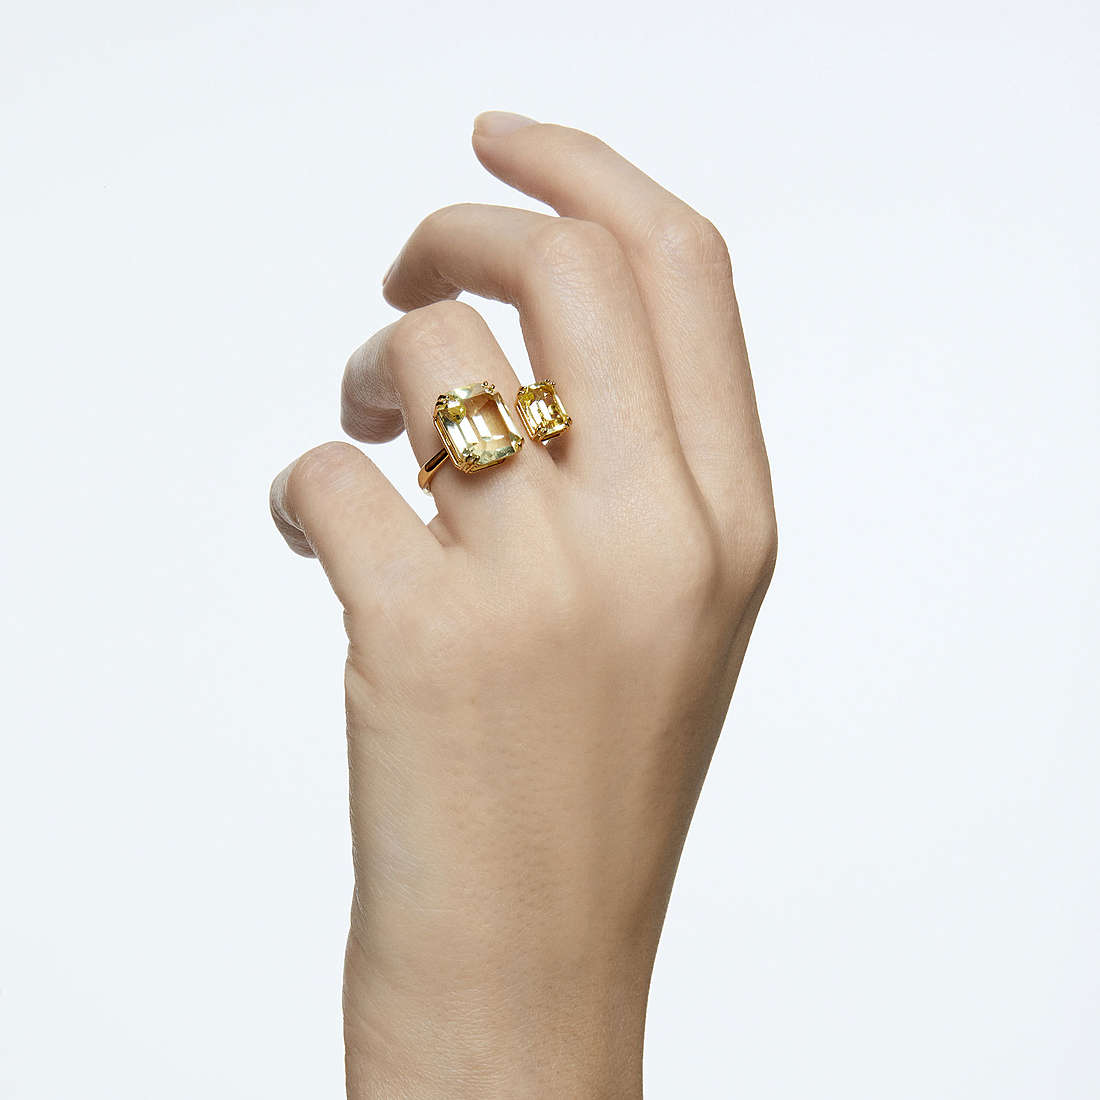 Swarovski rings Millenia woman 5608997 wearing